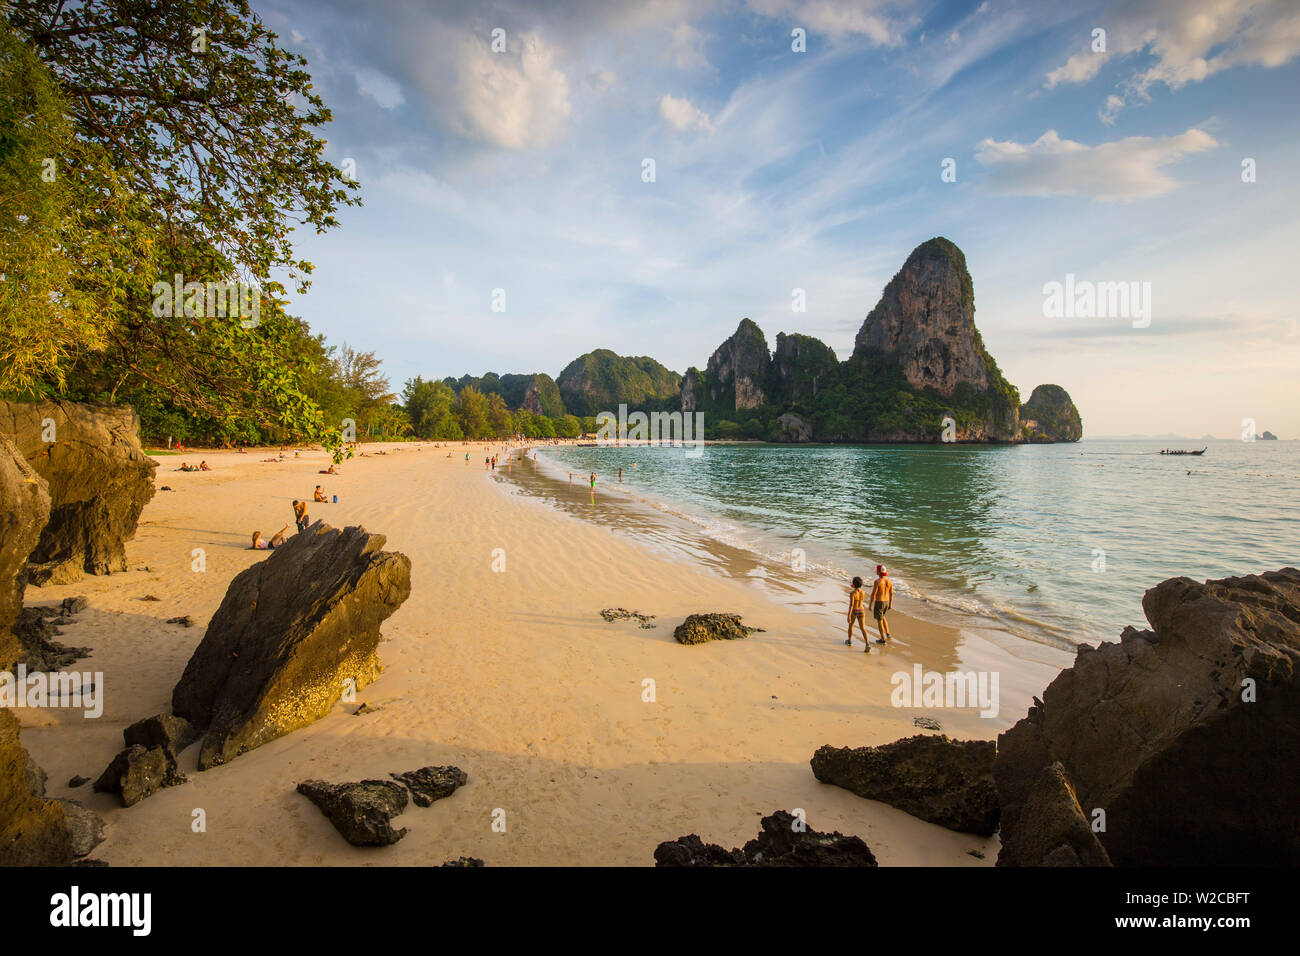 West Railay beach, Railay Peninsula, Krabi Province, Thailand Stock Photo